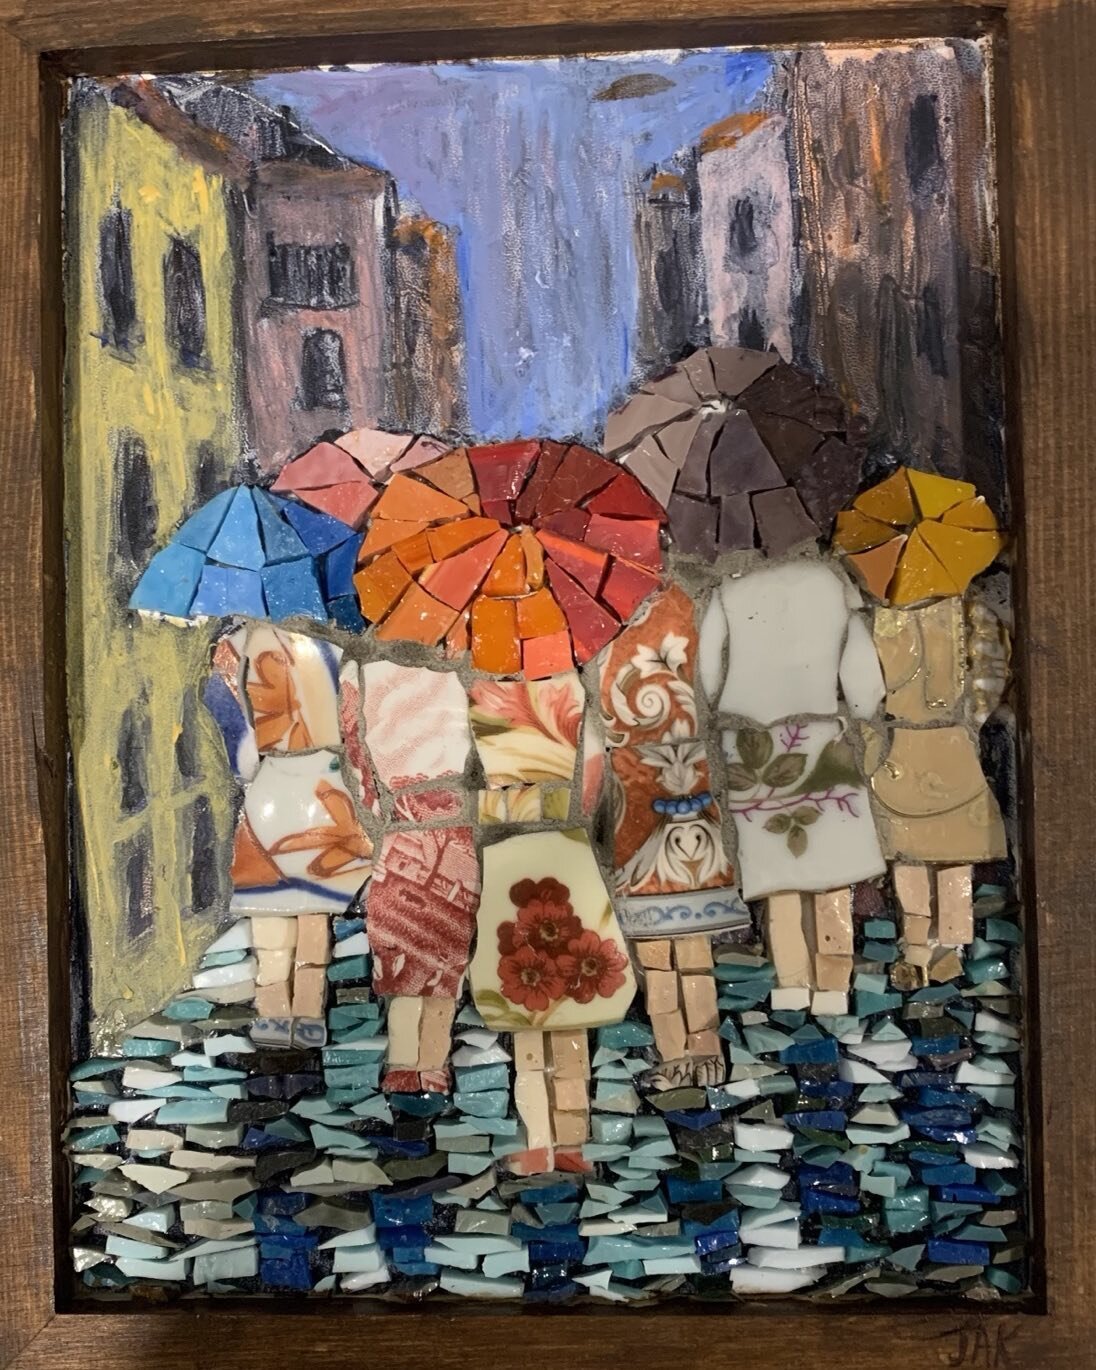 &ldquo;Umbrella women in Venice&rdquo;#mosaicart #cinncinnatiartist #mixedmediaart